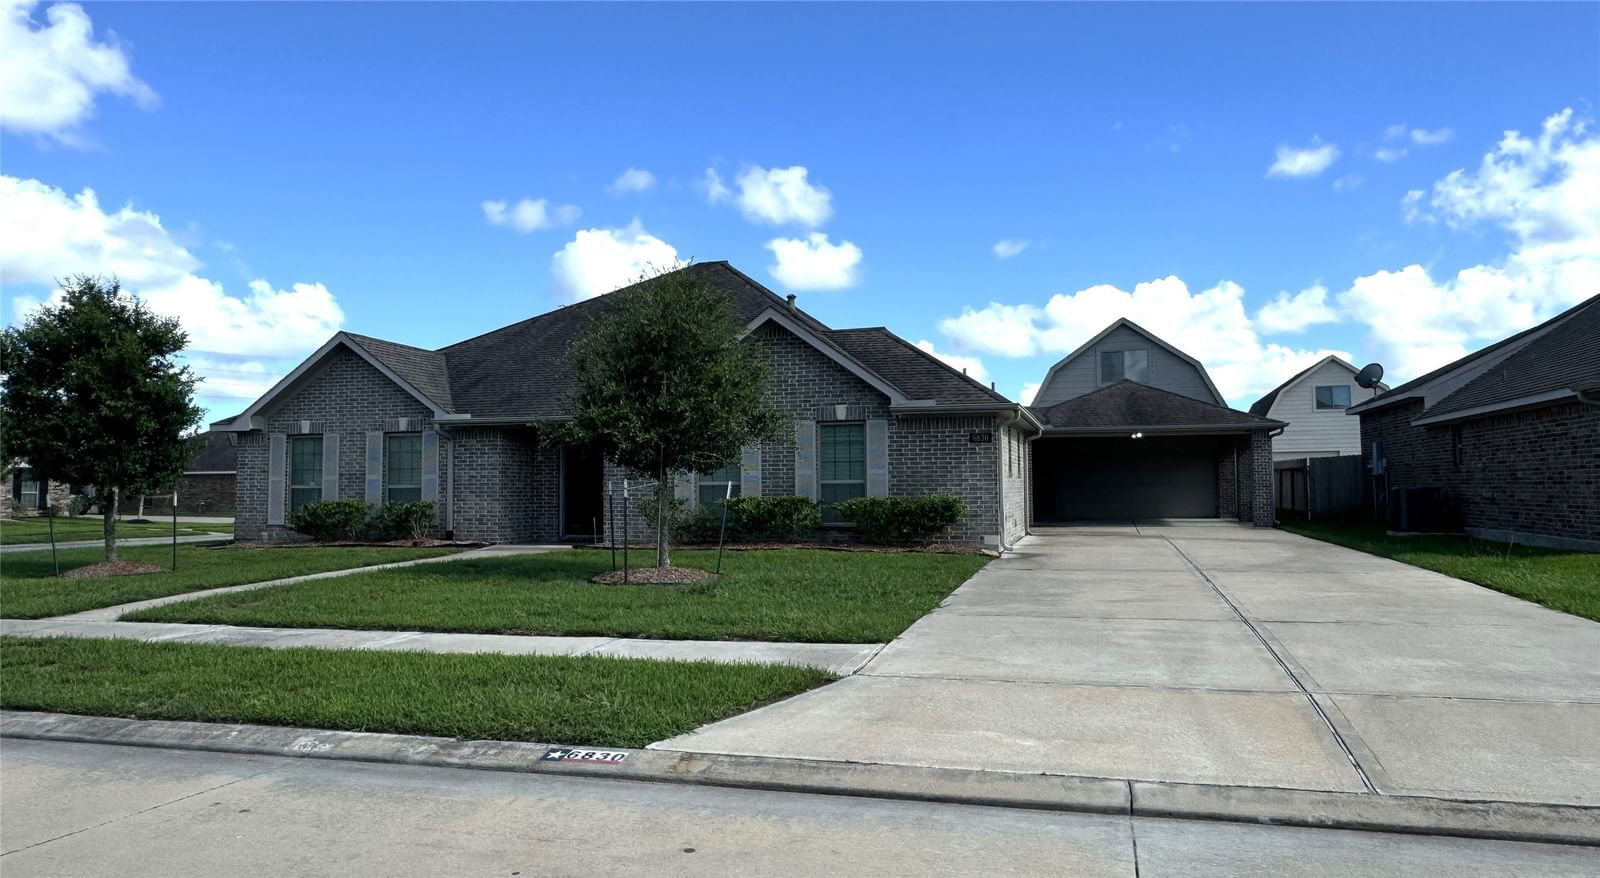 Real estate property located at 6830 Arlington, Brazoria, Lakeland SD Sec 4 A0493 Ht&Br, Manvel, TX, US